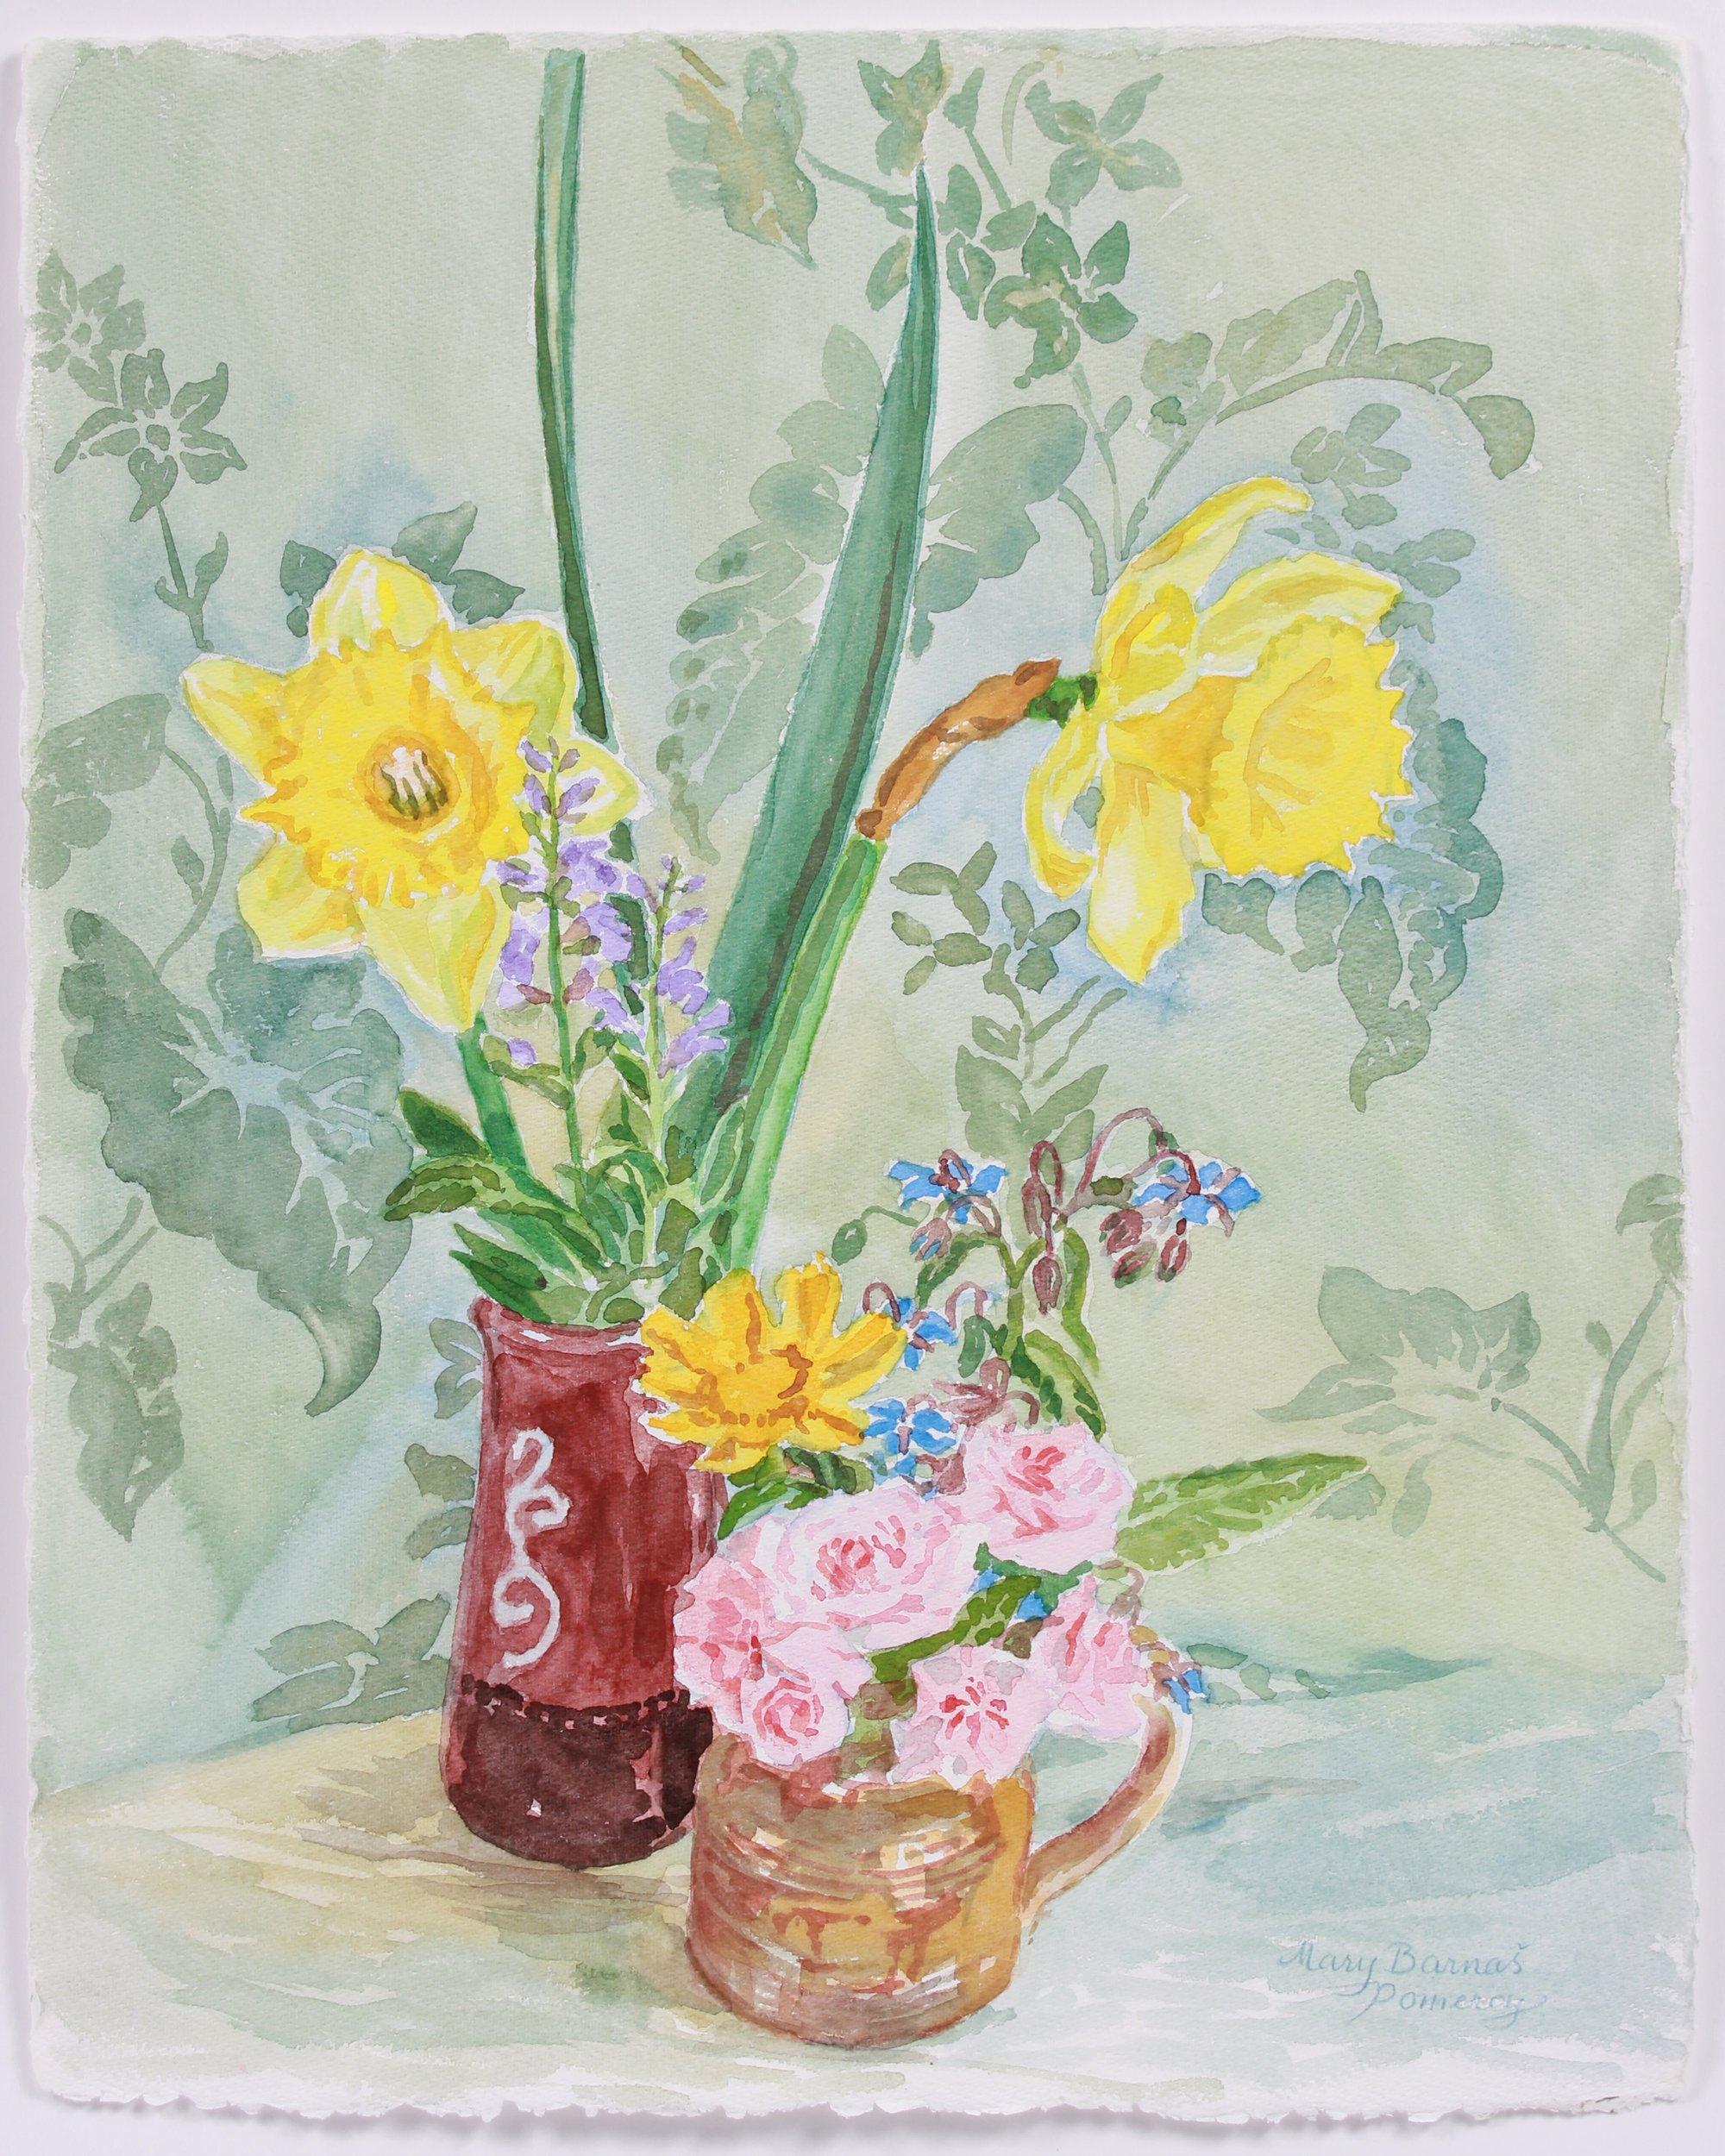 Mary Pomeroy Landscape Art - "Two April Bouquets" April 9 Watercolor Still Life